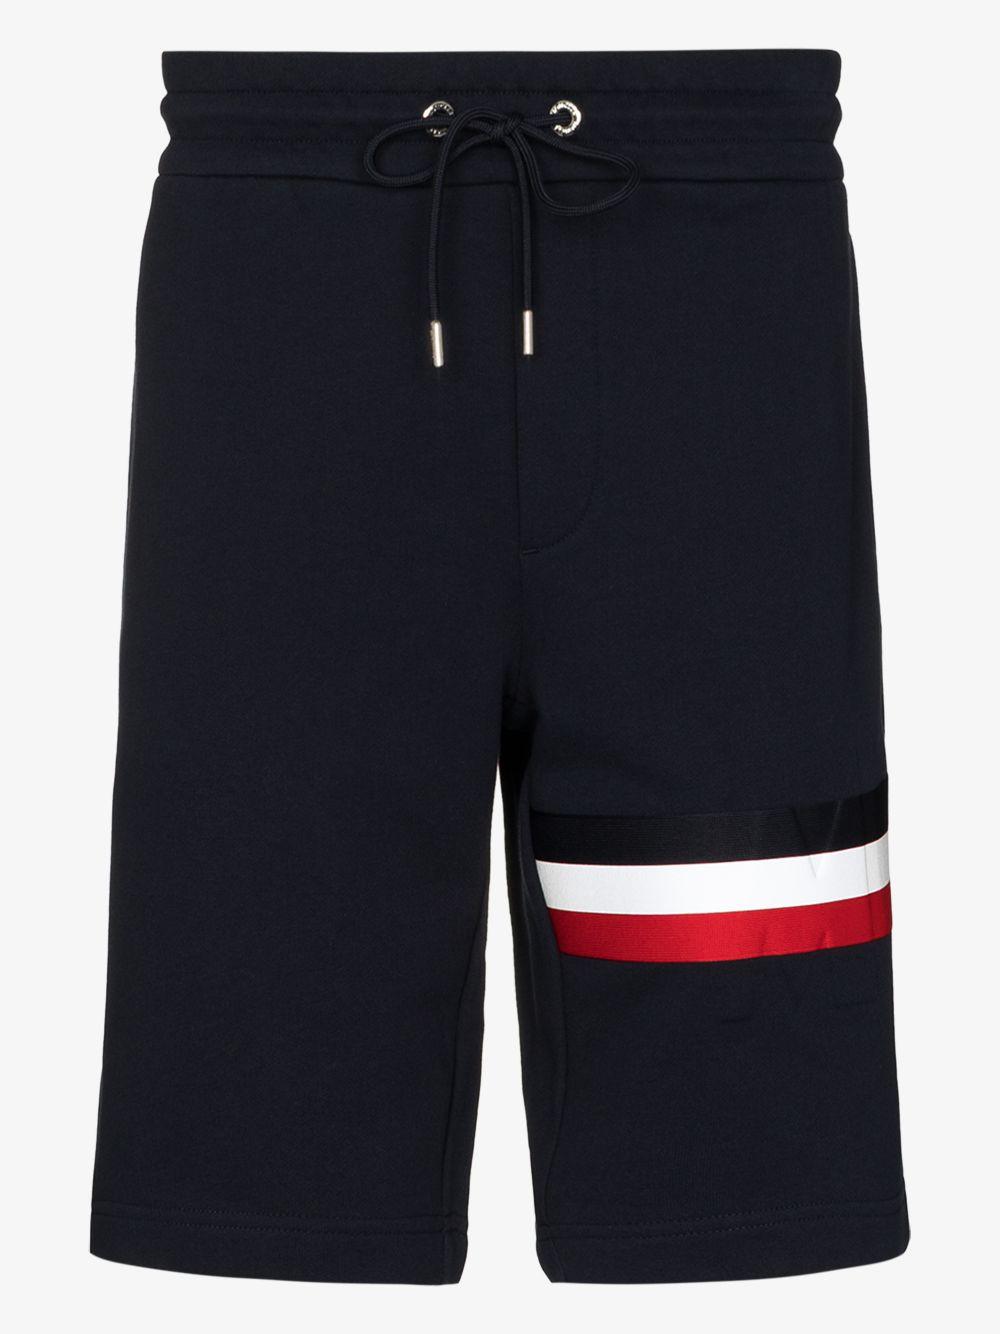 Moncler Stripe Trim Cotton Track Shorts in Blue for Men - Lyst